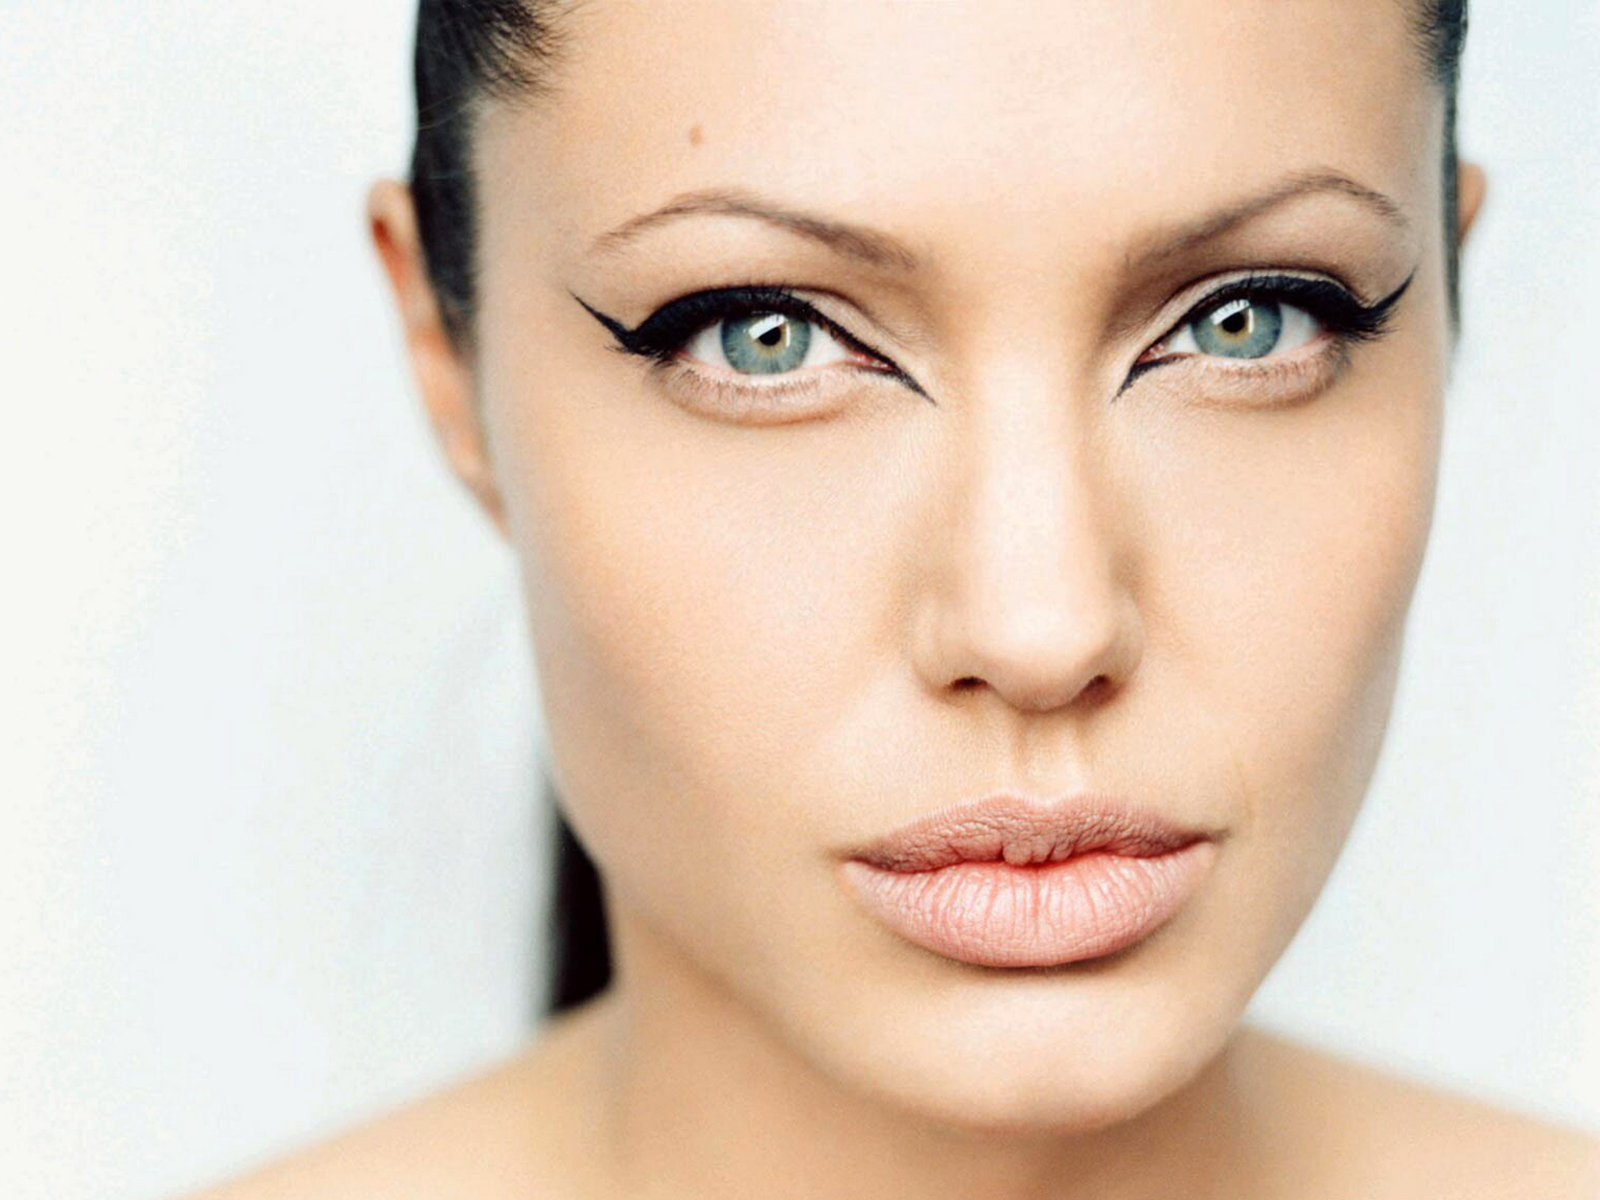 http://1.bp.blogspot.com/-6tnIHsj5kh0/TxmFaCwIWdI/AAAAAAAABaE/TN104BTmoEQ/s1600/Angelina-Jolie-Wallpapers-Widescreen-5.jpg